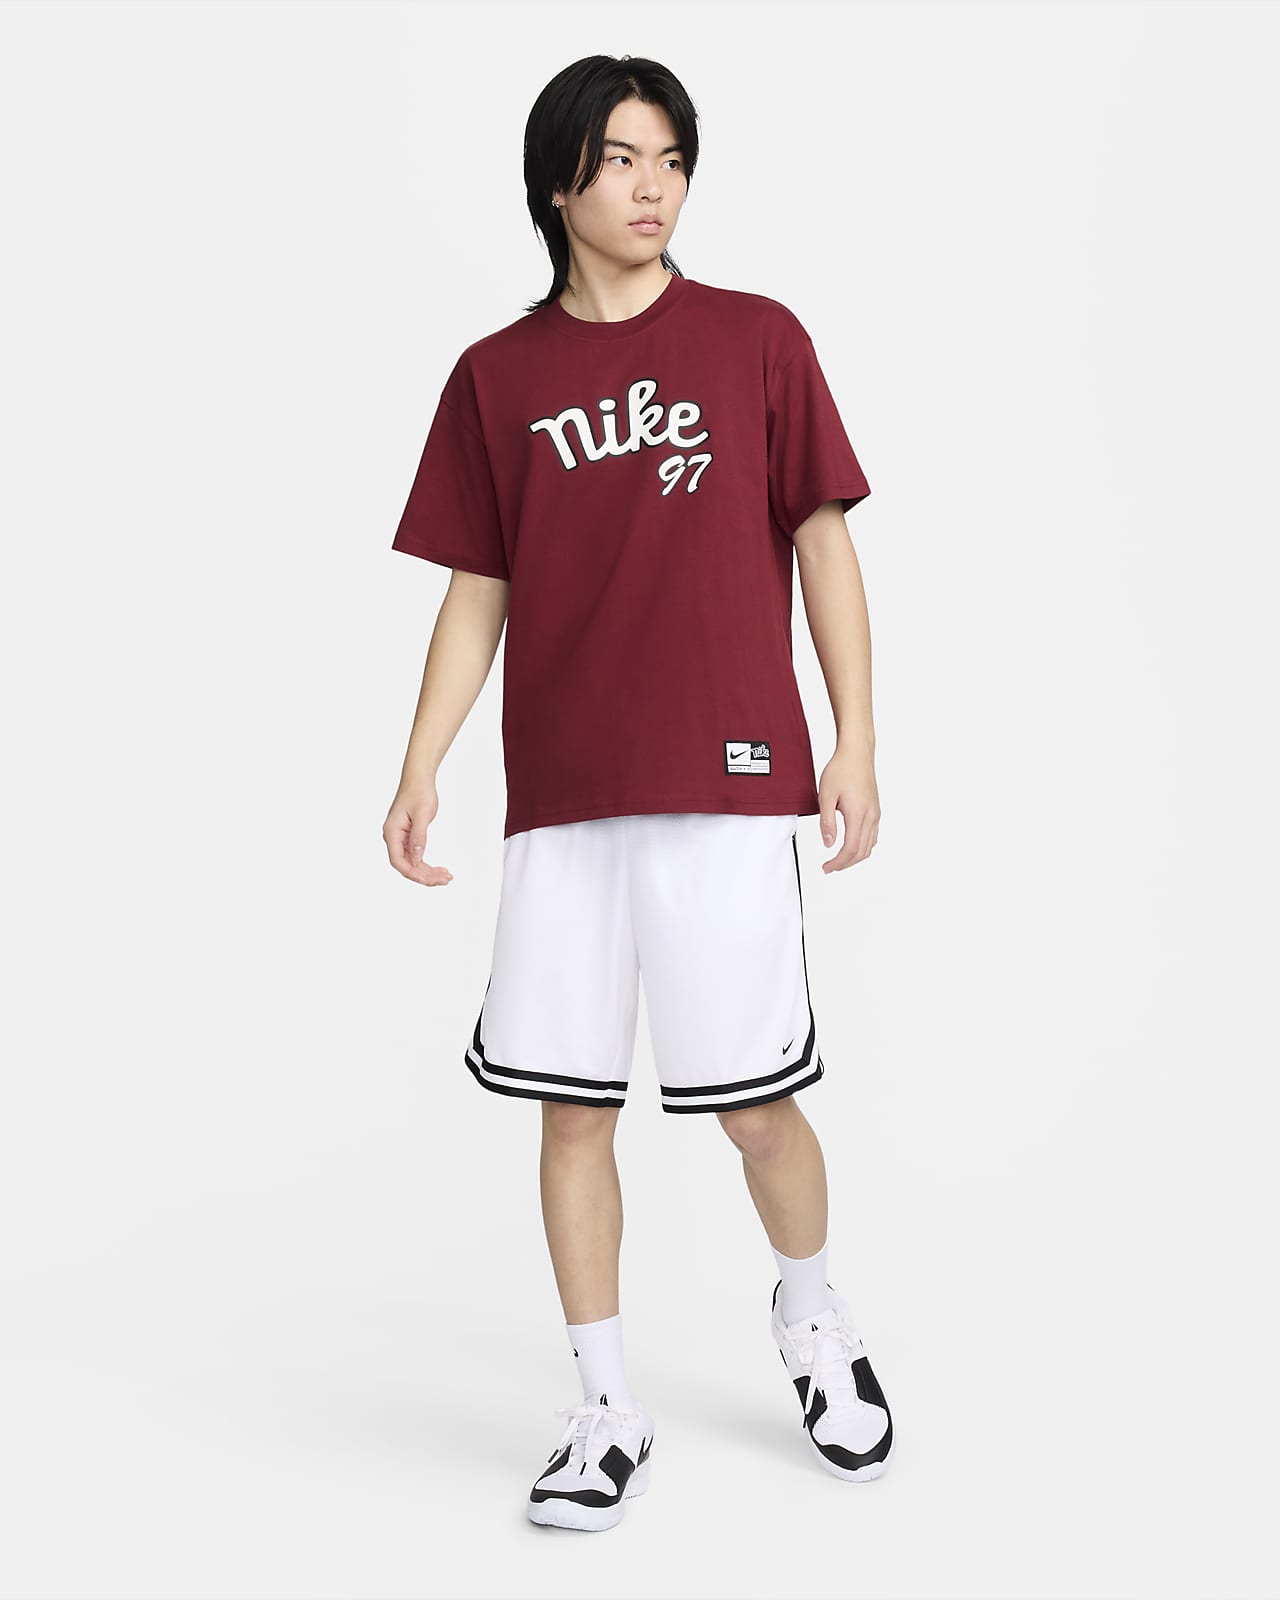 NIKE公式】ナイキ メンズ マックス90 バスケットボール Tシャツ ...